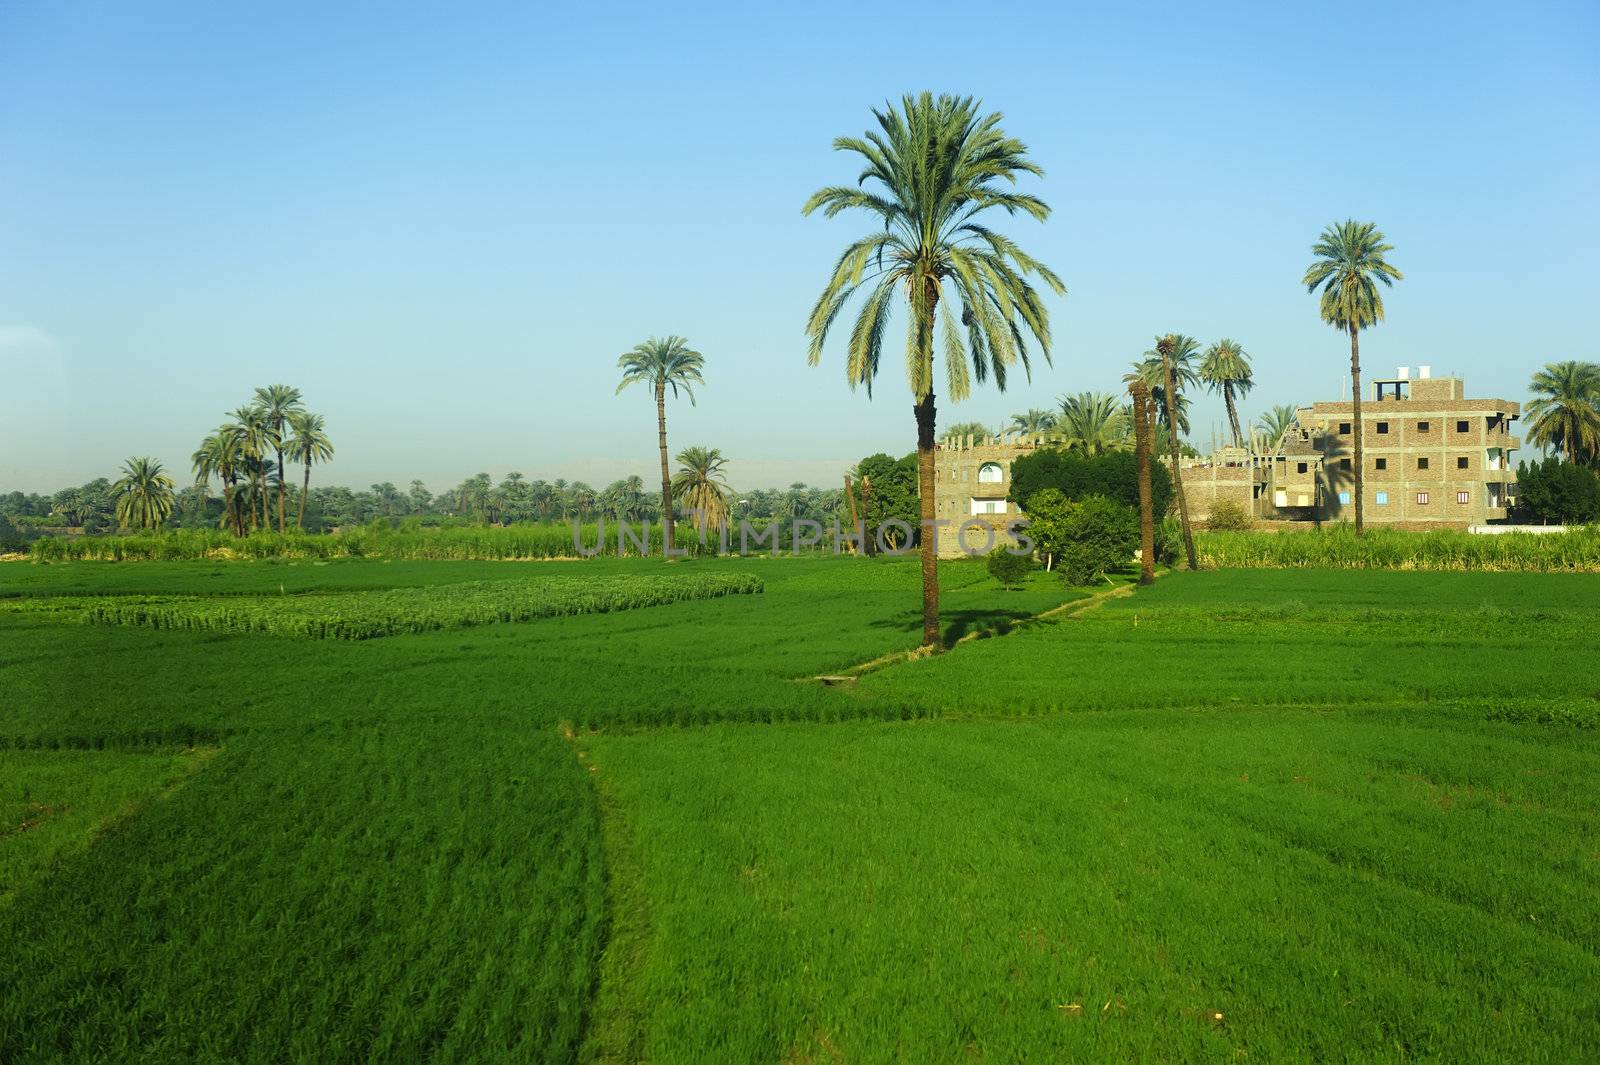 date palm tree in farm land in Egypt